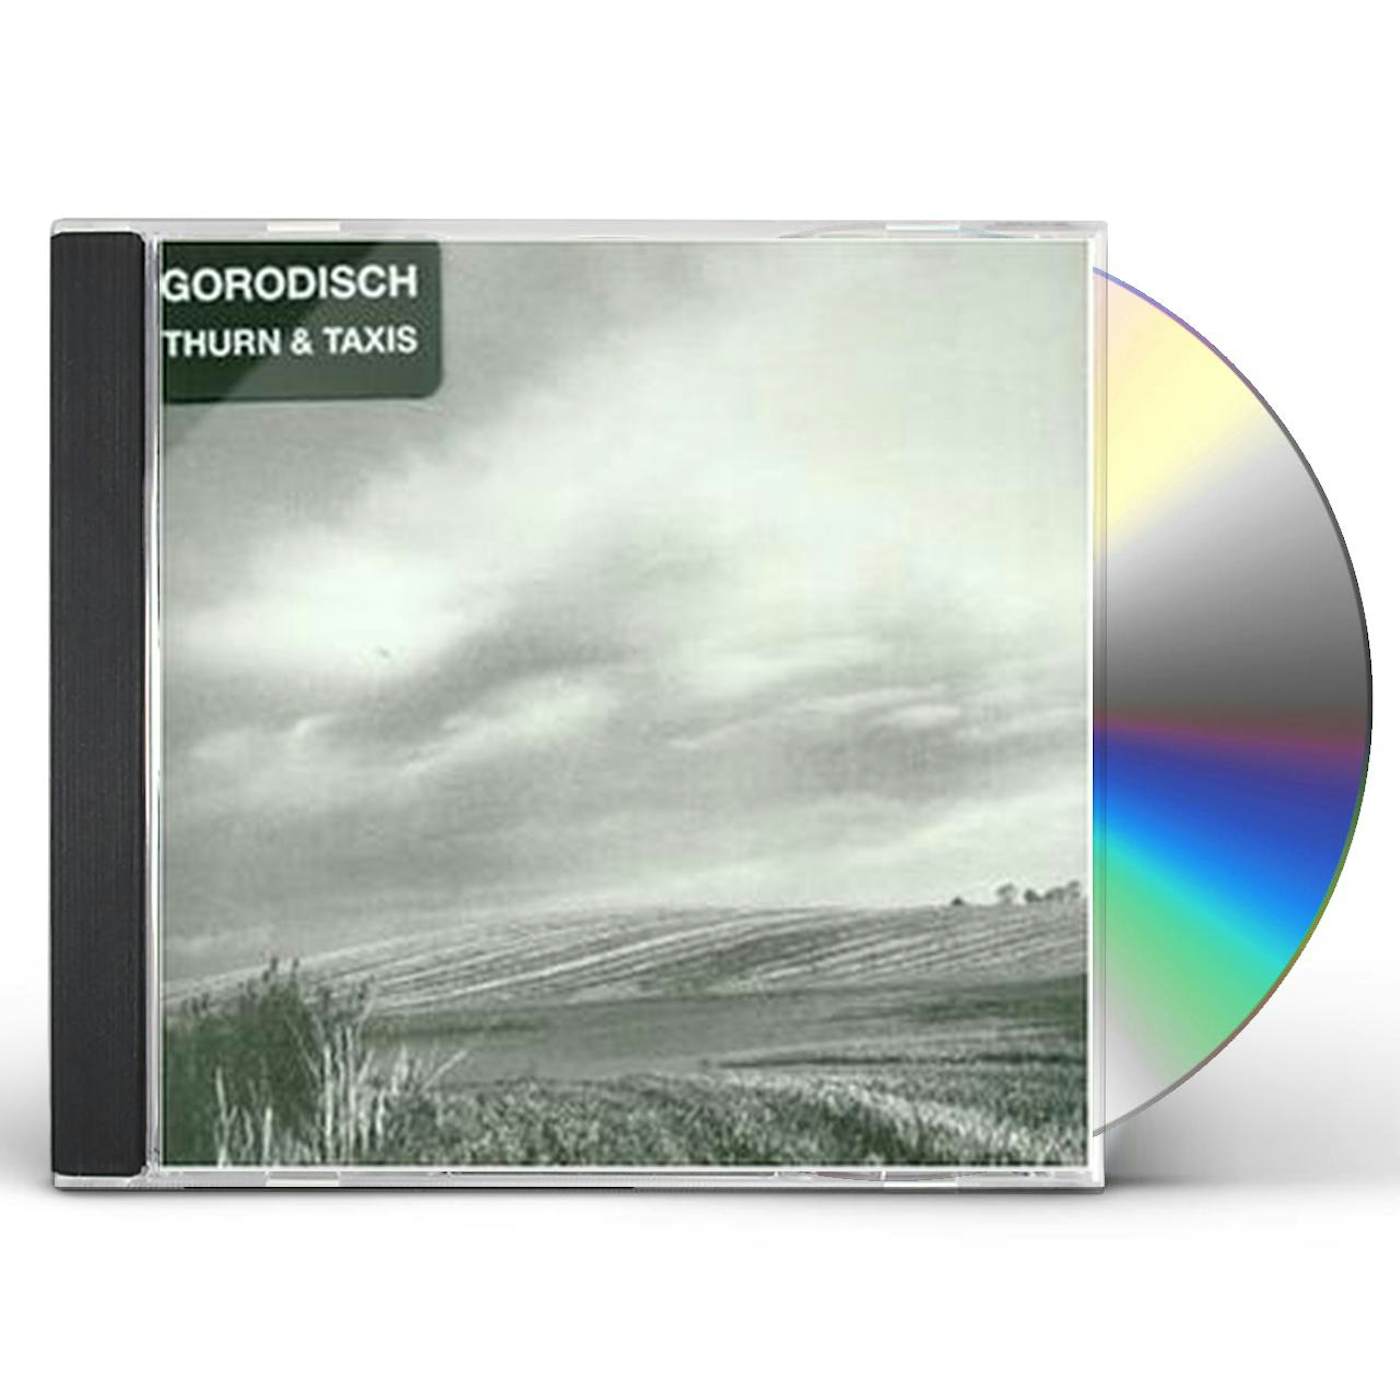 Gorodisch THURN & TAXIS CD